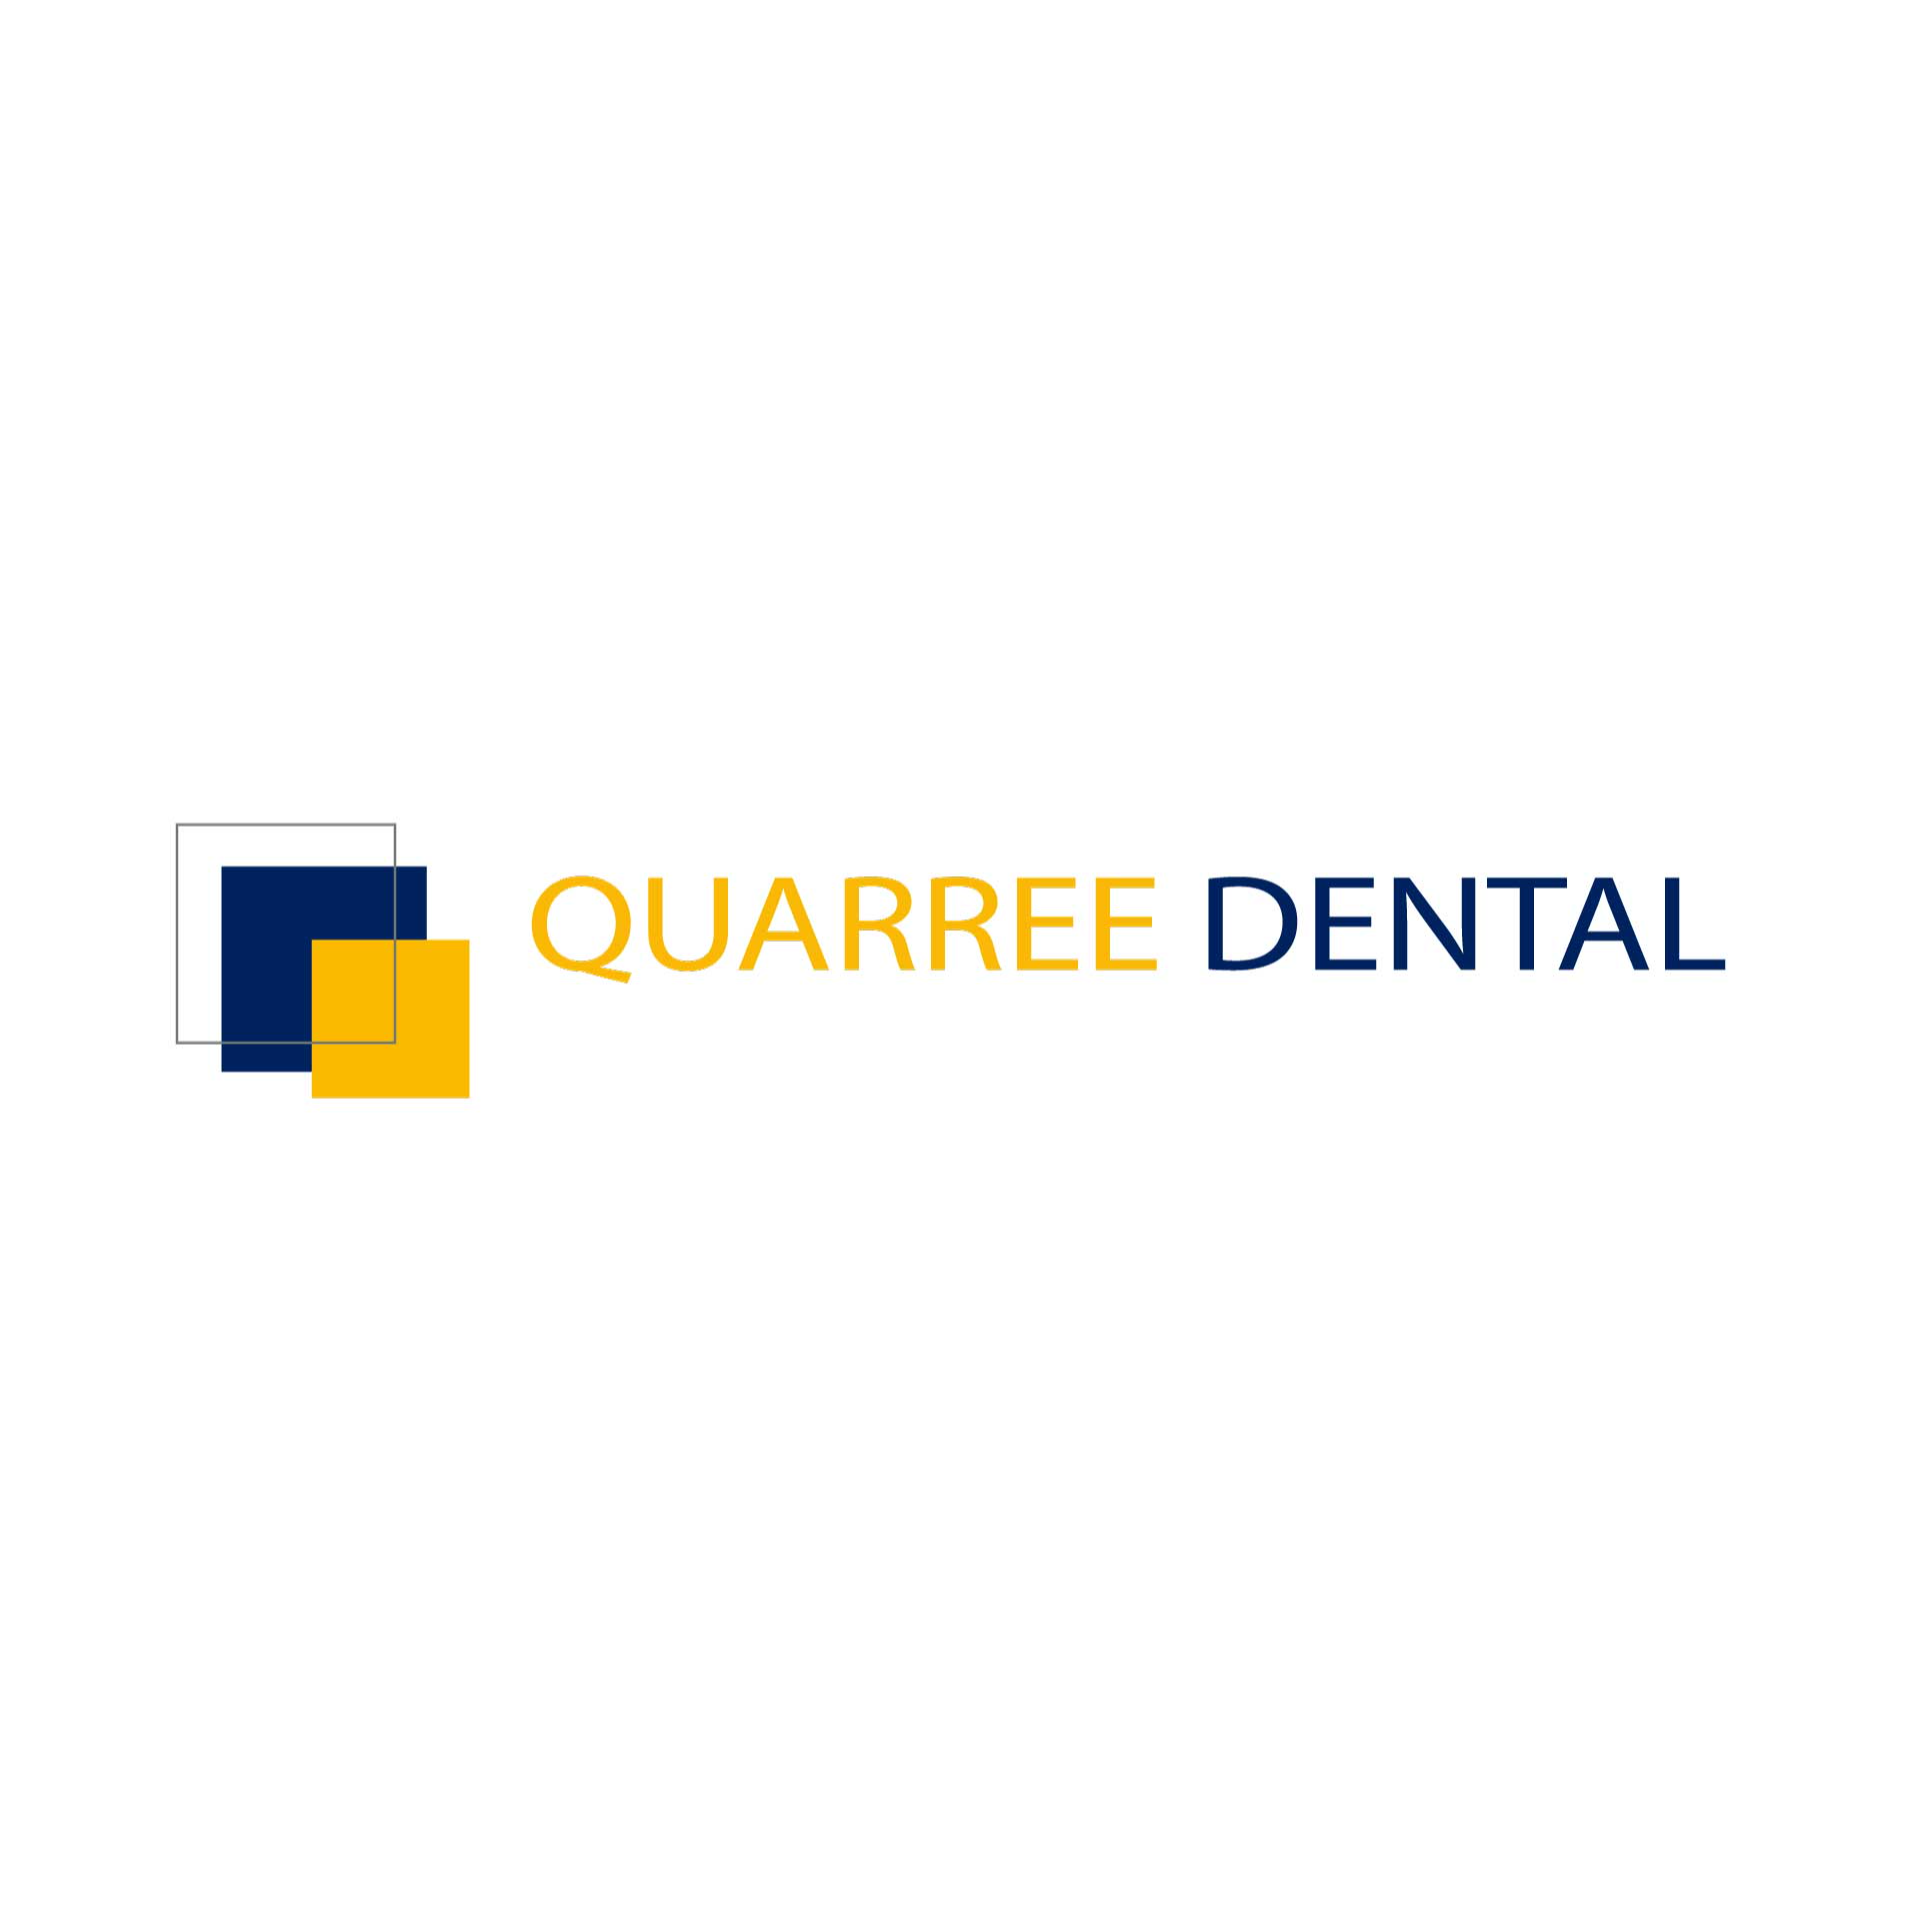 Quarree Dental - Zahnarzt Hamburg Wandsbek Logo